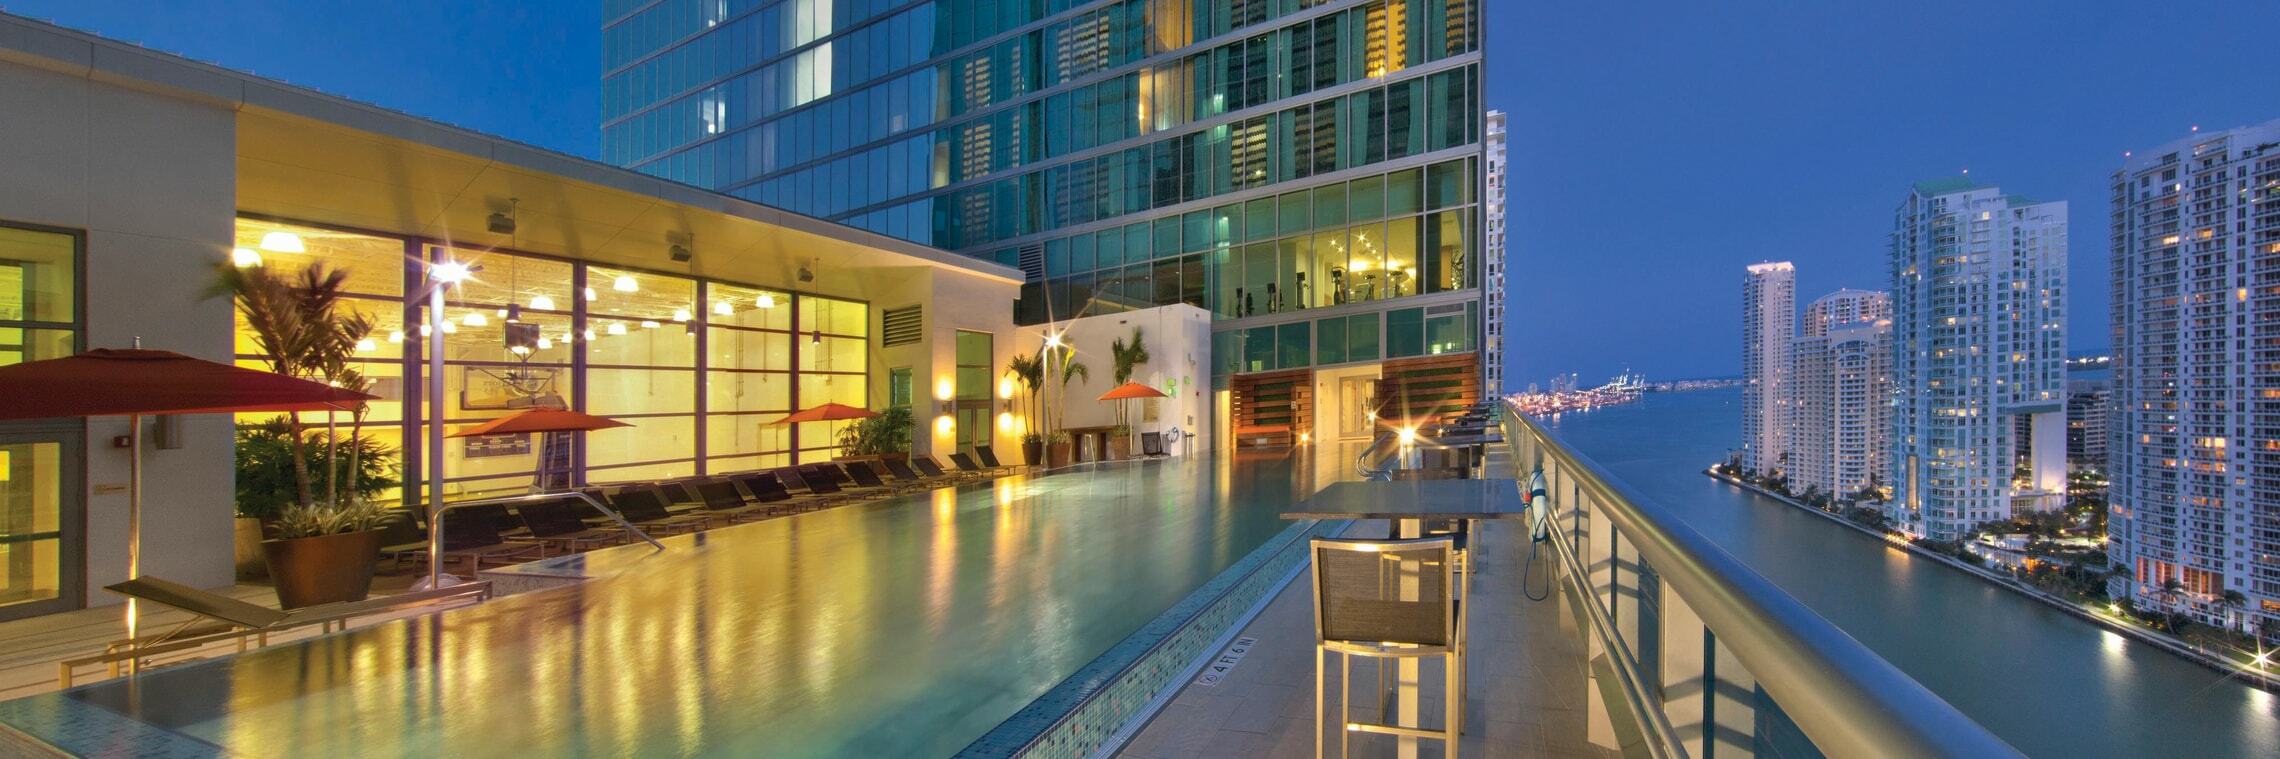 Photo of JW Marriott Marquis Miami / Hotel Beaux Arts Miami, Miami, FL